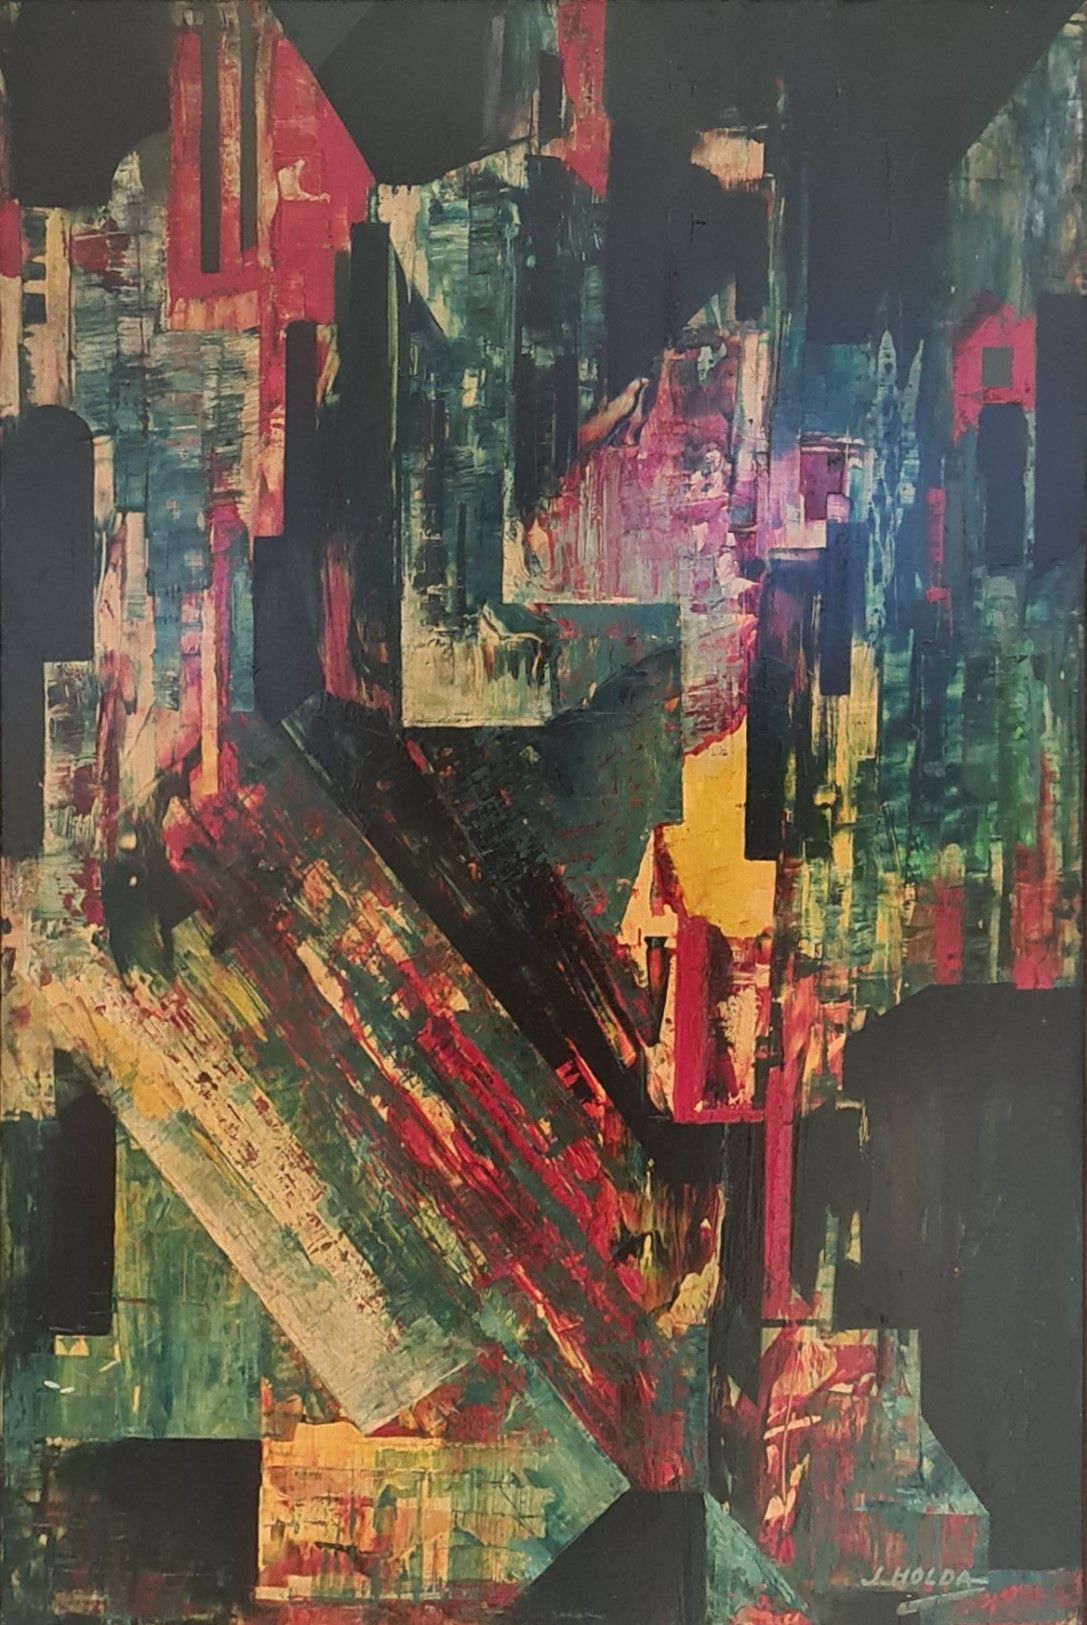 Stany HOLDA (1919-1981) 斯坦尼-霍尔达（1919-1981）。抽象主义。油画在面板上。尺寸：90 x 60厘米。

斯坦尼-霍尔达（19&hellip;